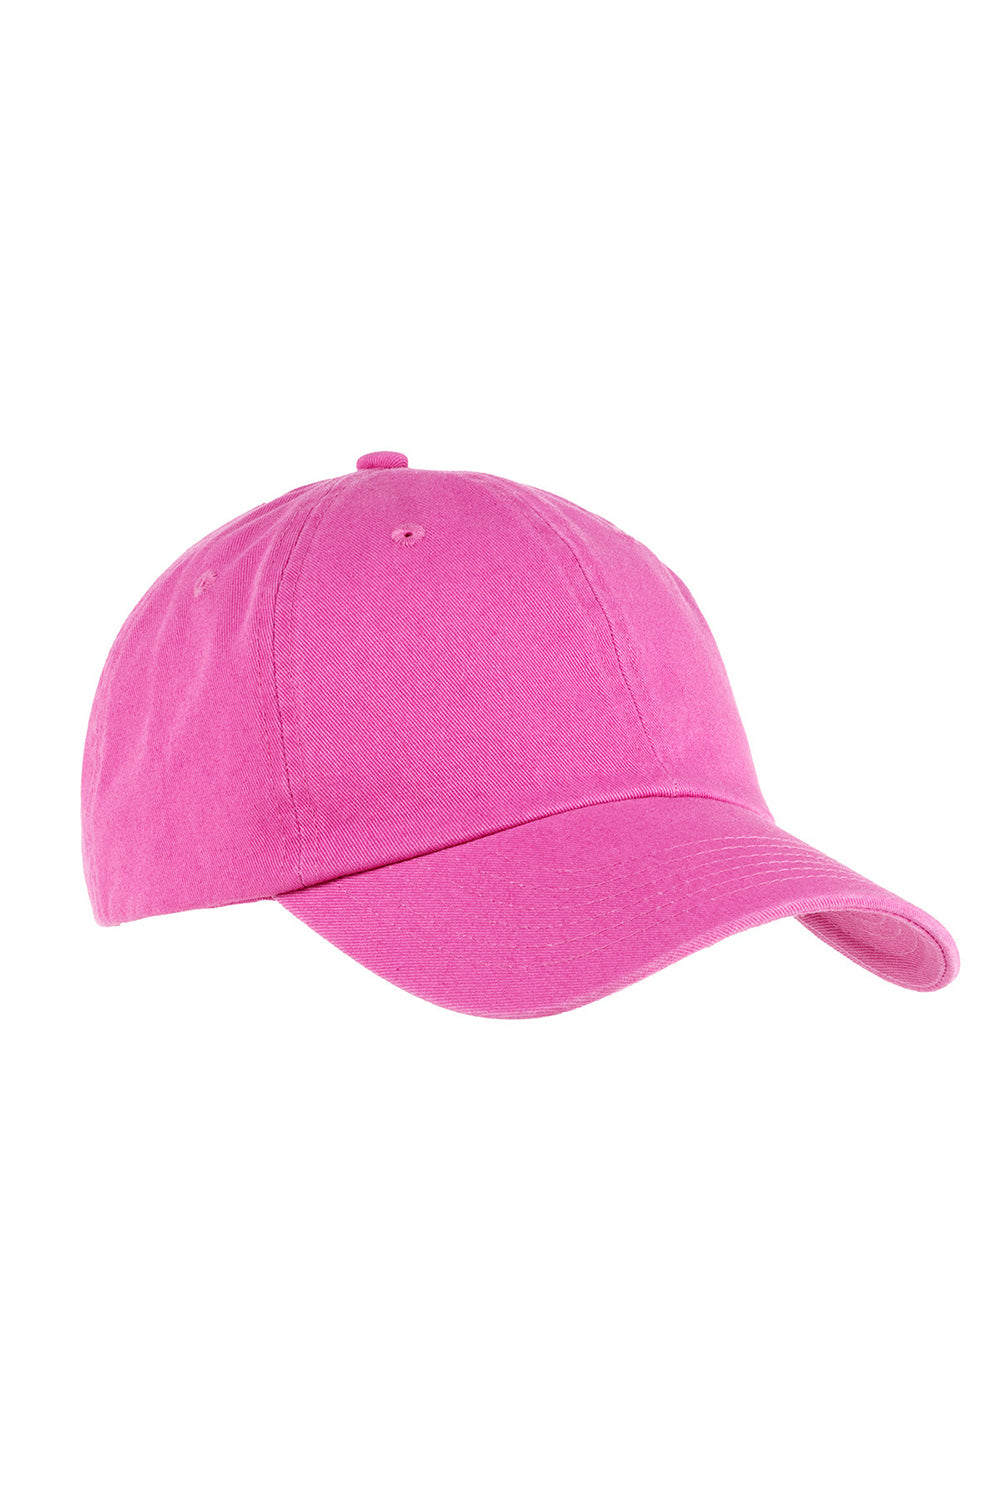 Big Accessories BX005 Mens Adjustable Hat Raspberry Pink Flat Front